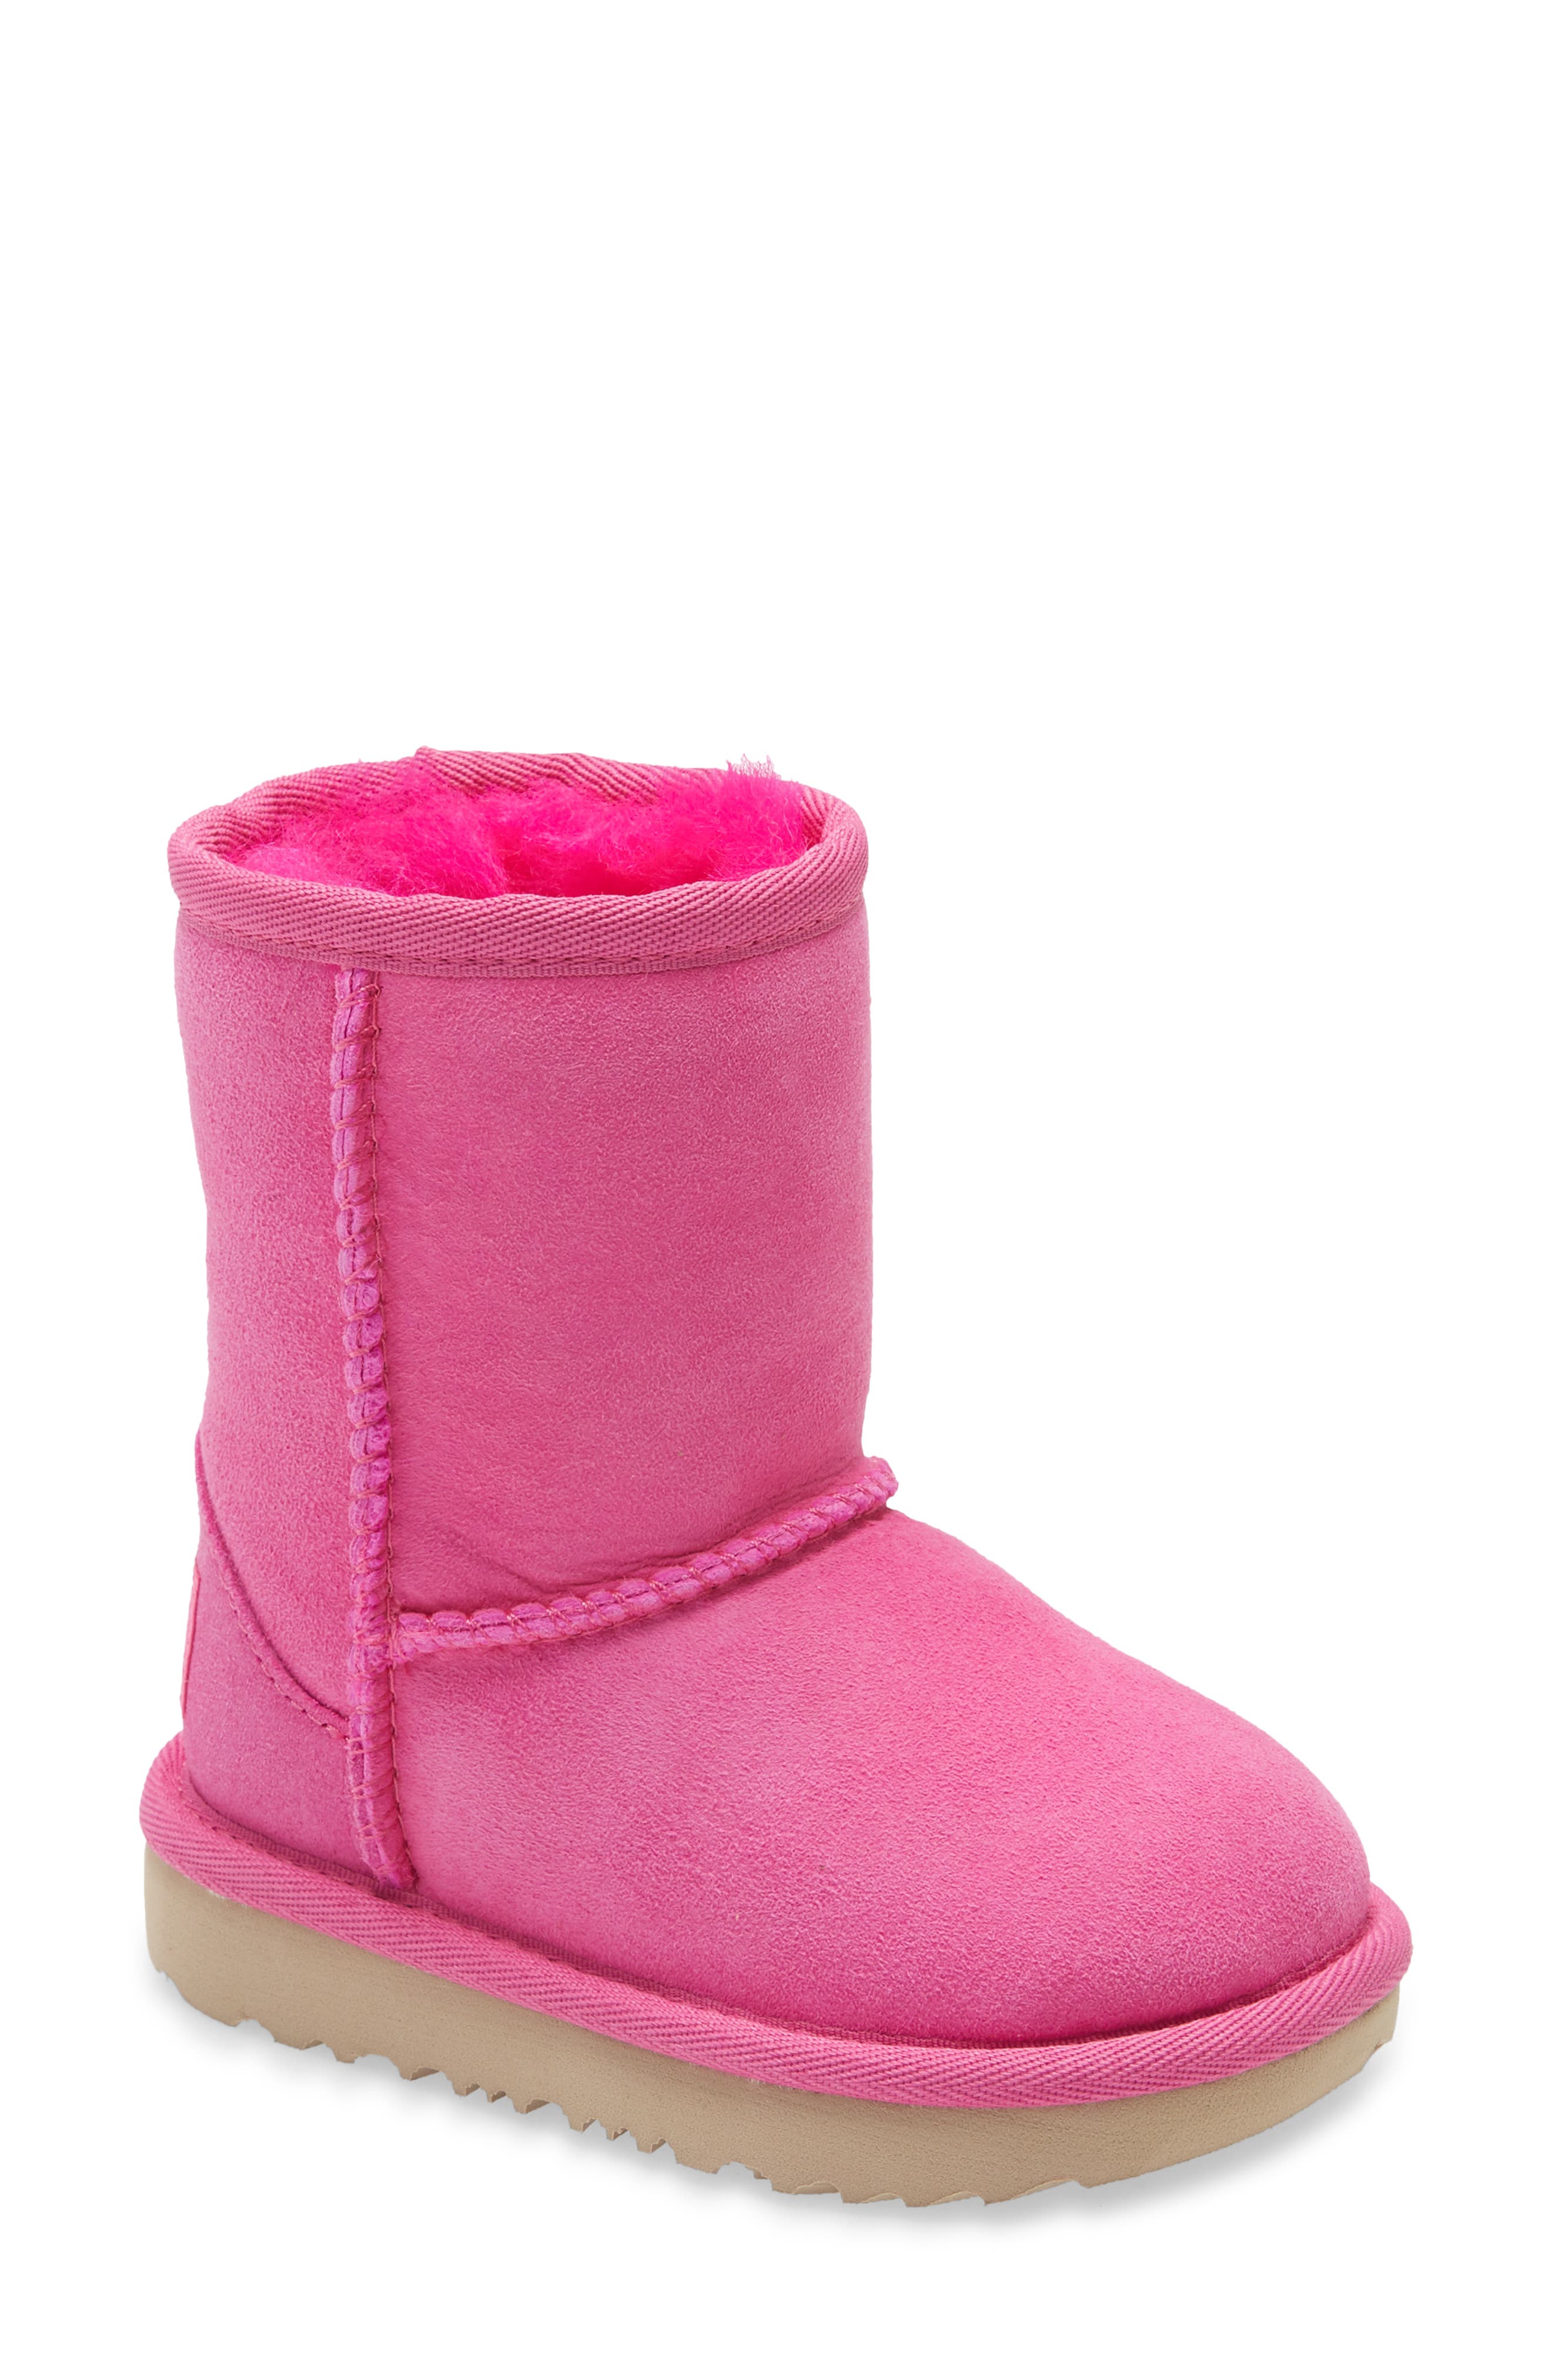 ugg baby sandals pink